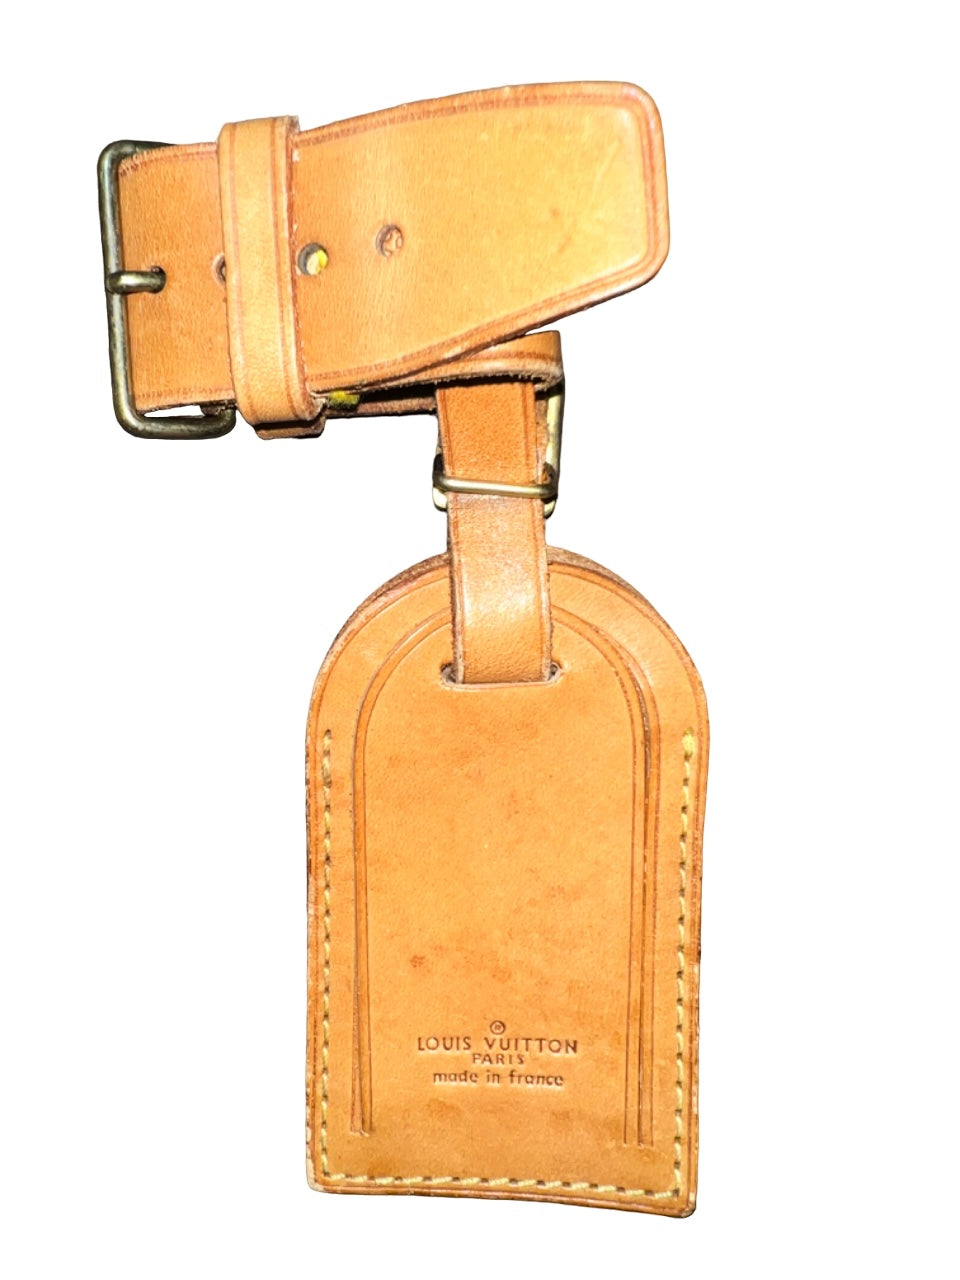 Originale pre-loved Louis Vuitton Luggage Travel Tags Adressanhänger